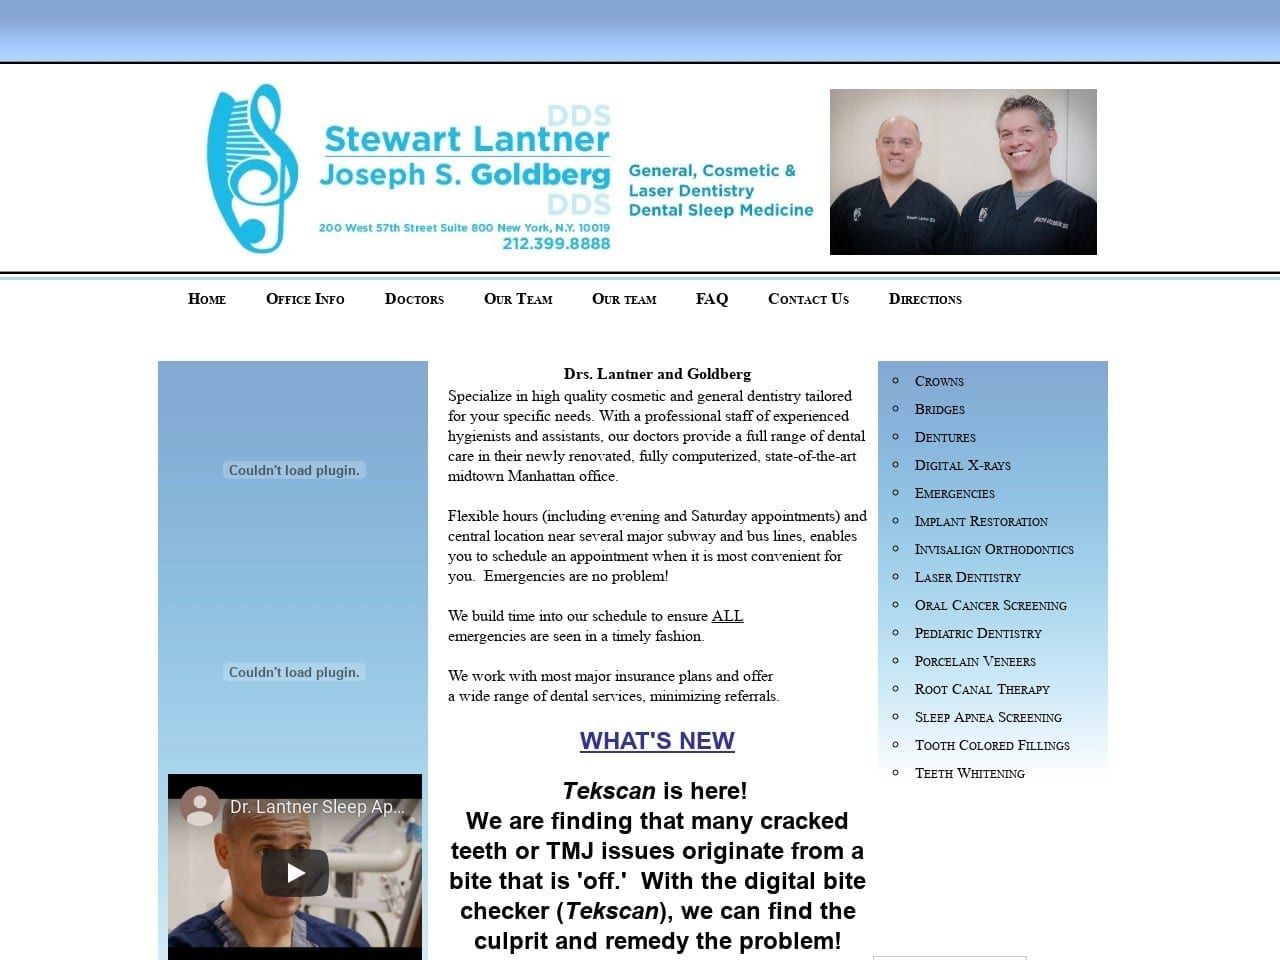 Joseph S. Goldberg DDS LLC Website Screenshot from drlantner.com